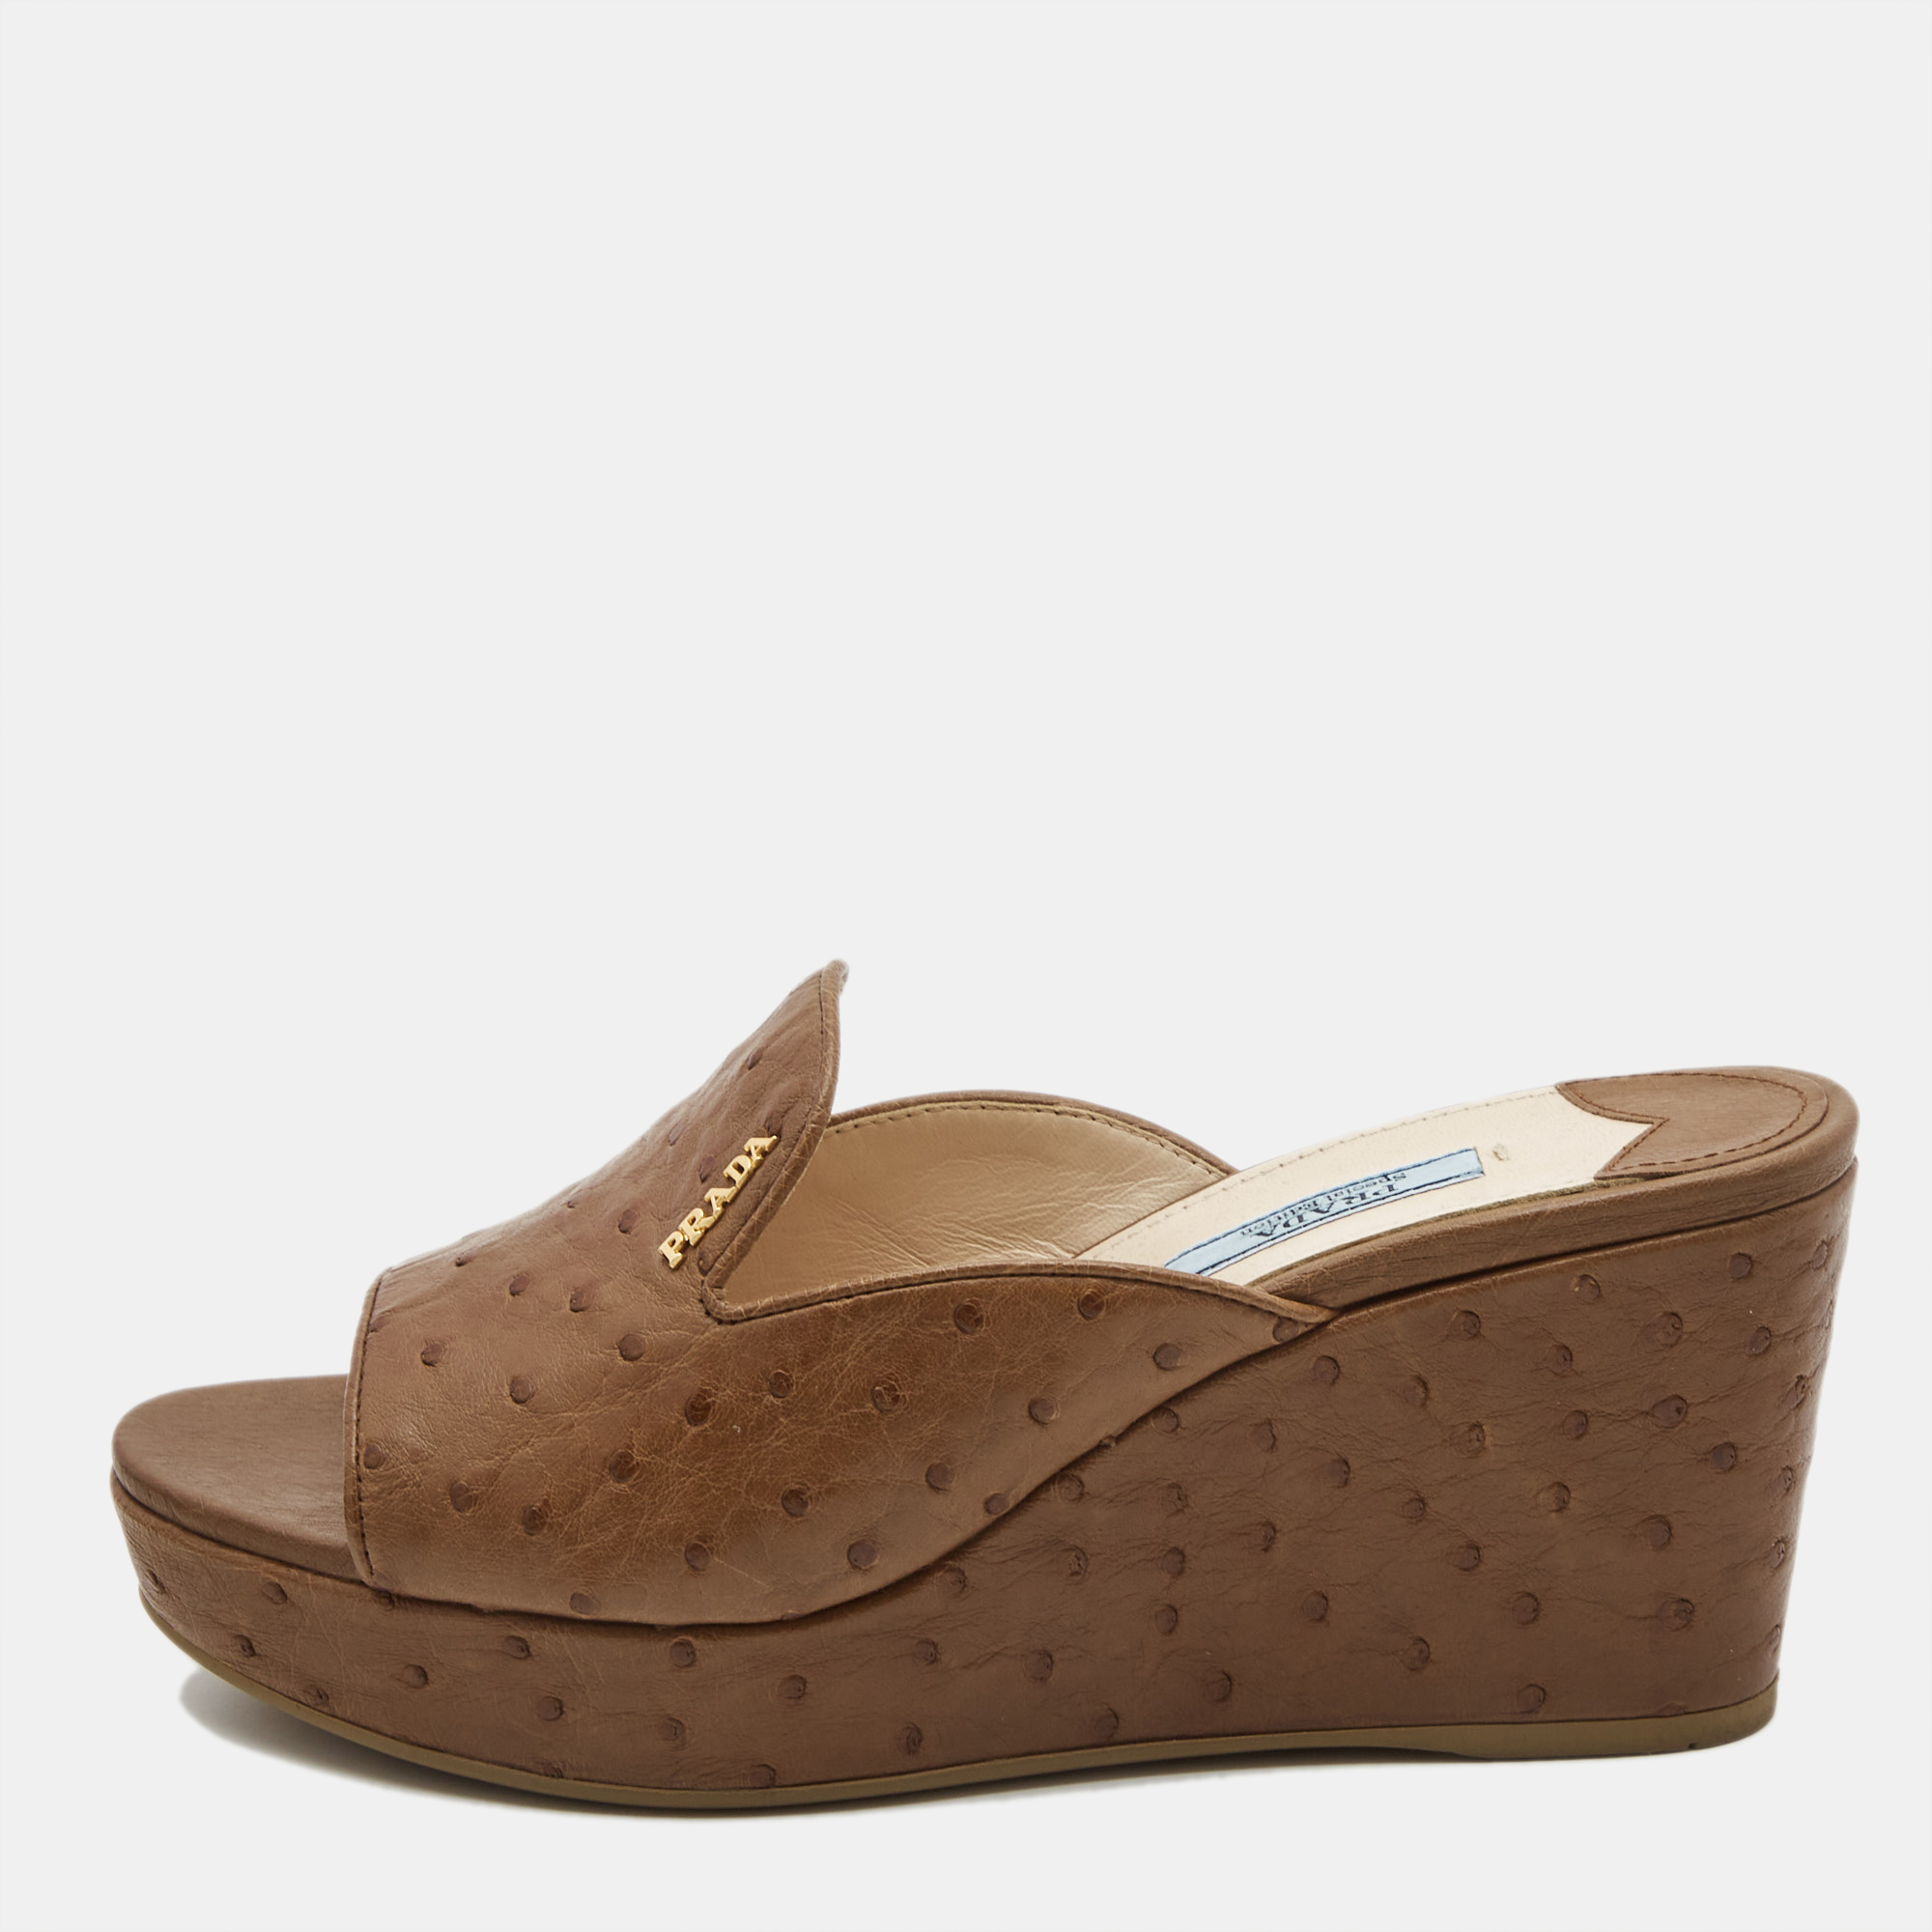 Prada brown ostrich leather wedge platform open toe slide sandals size 37.5